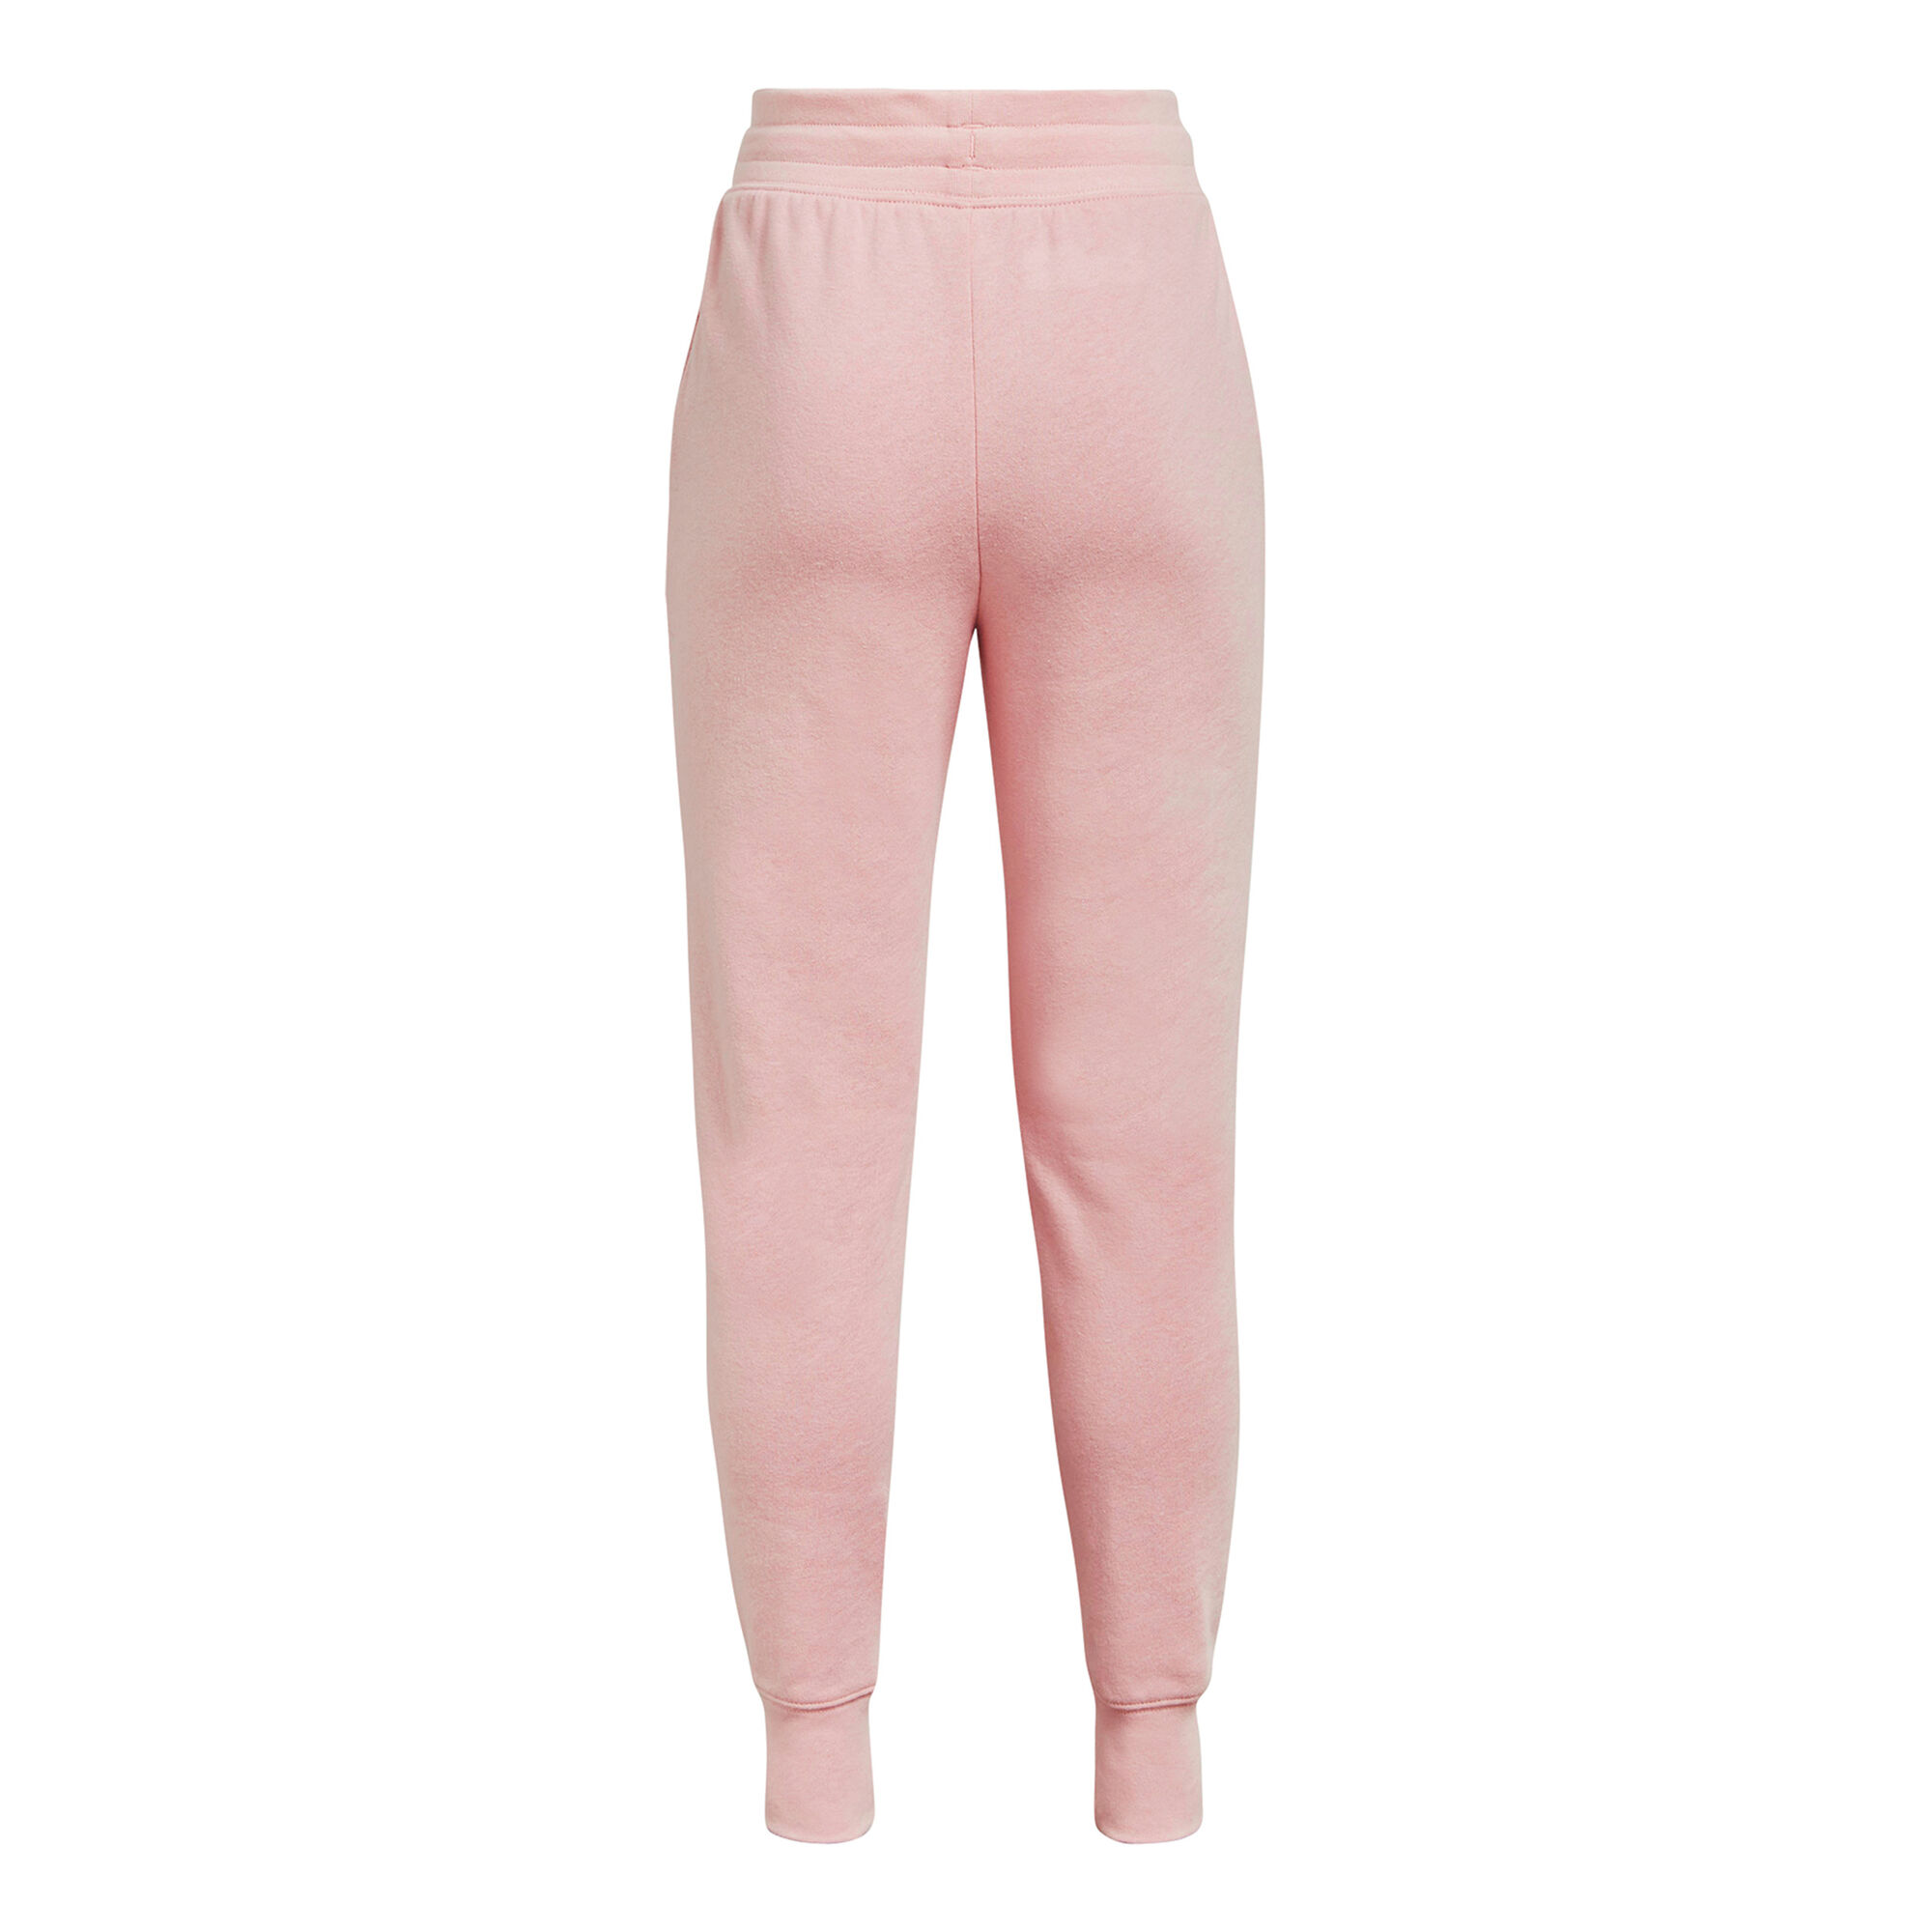 Buy Under Armour Rival Fleece Training Pants Girls Pink online